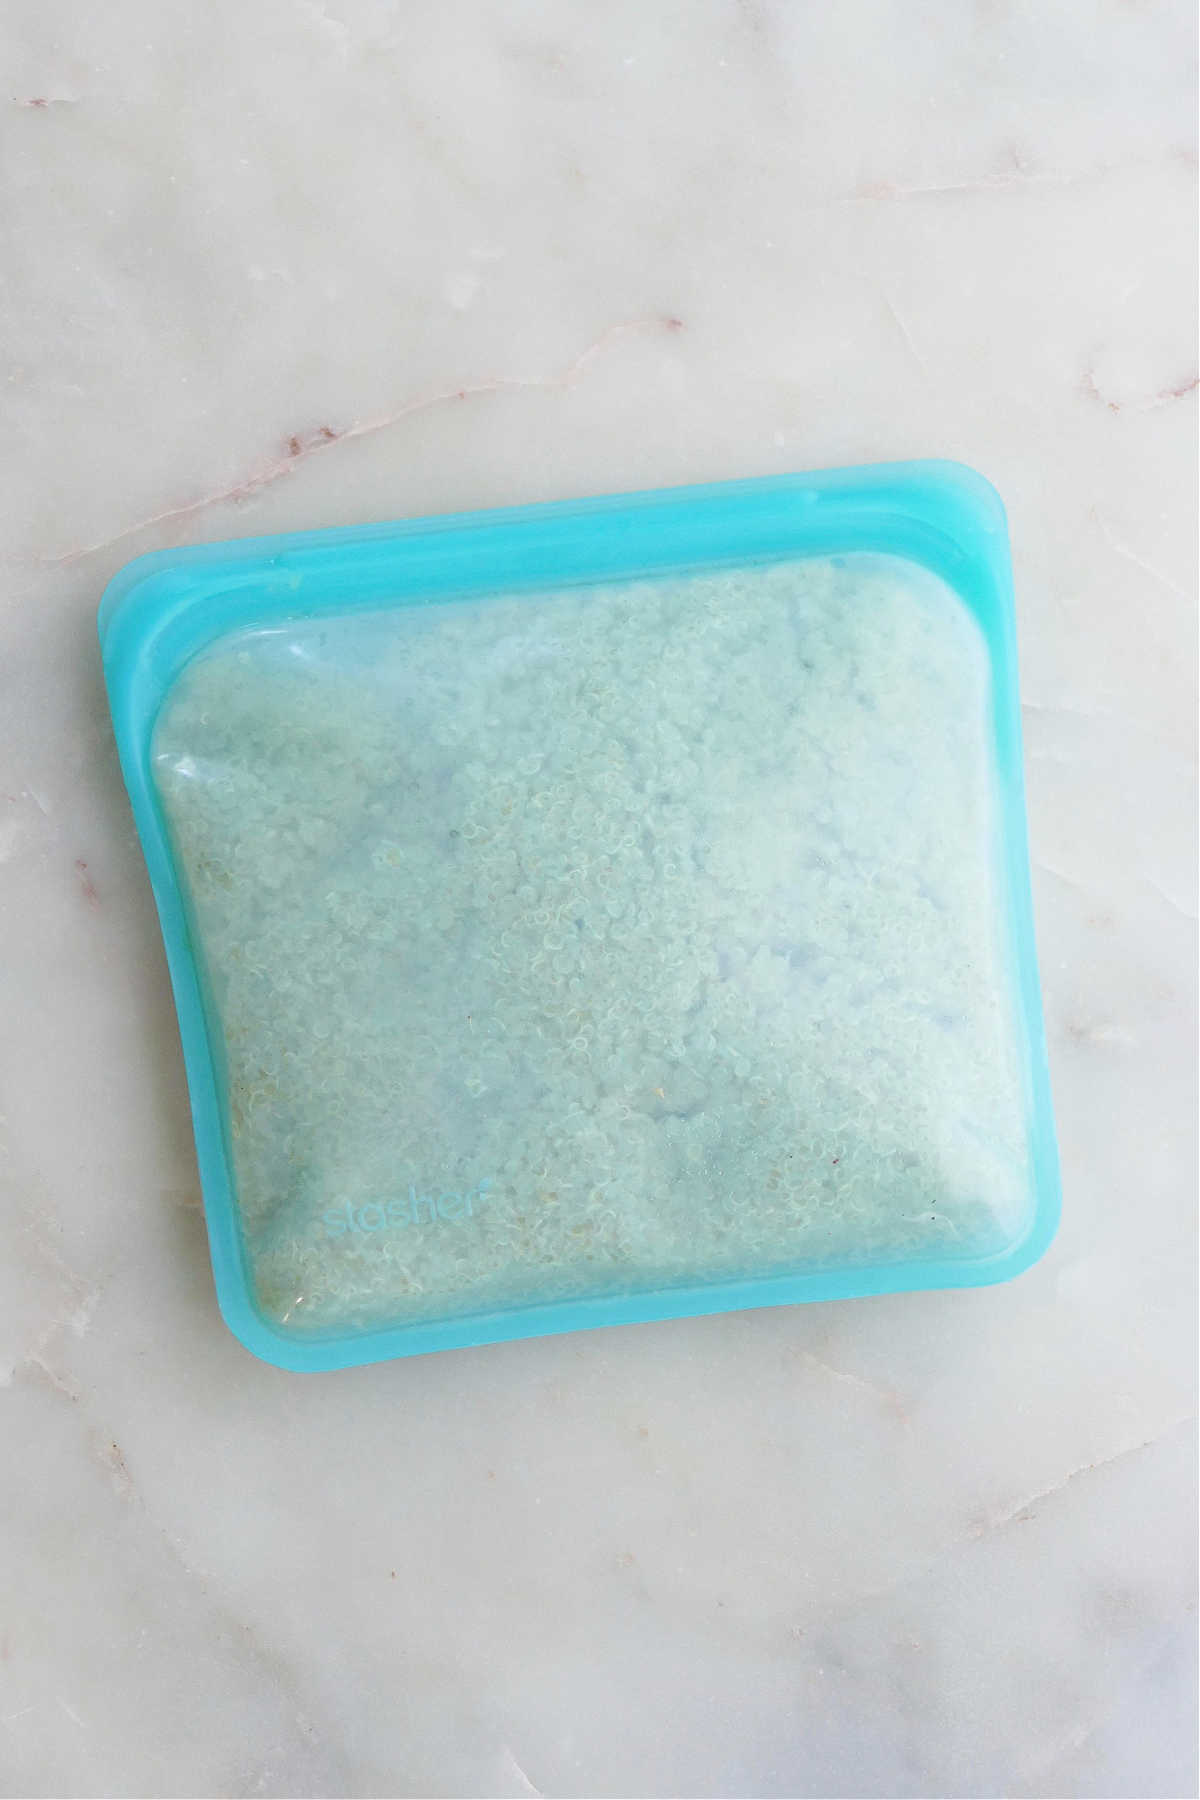 cooked quinoa in a reusable silicone Stasher bag on a counter